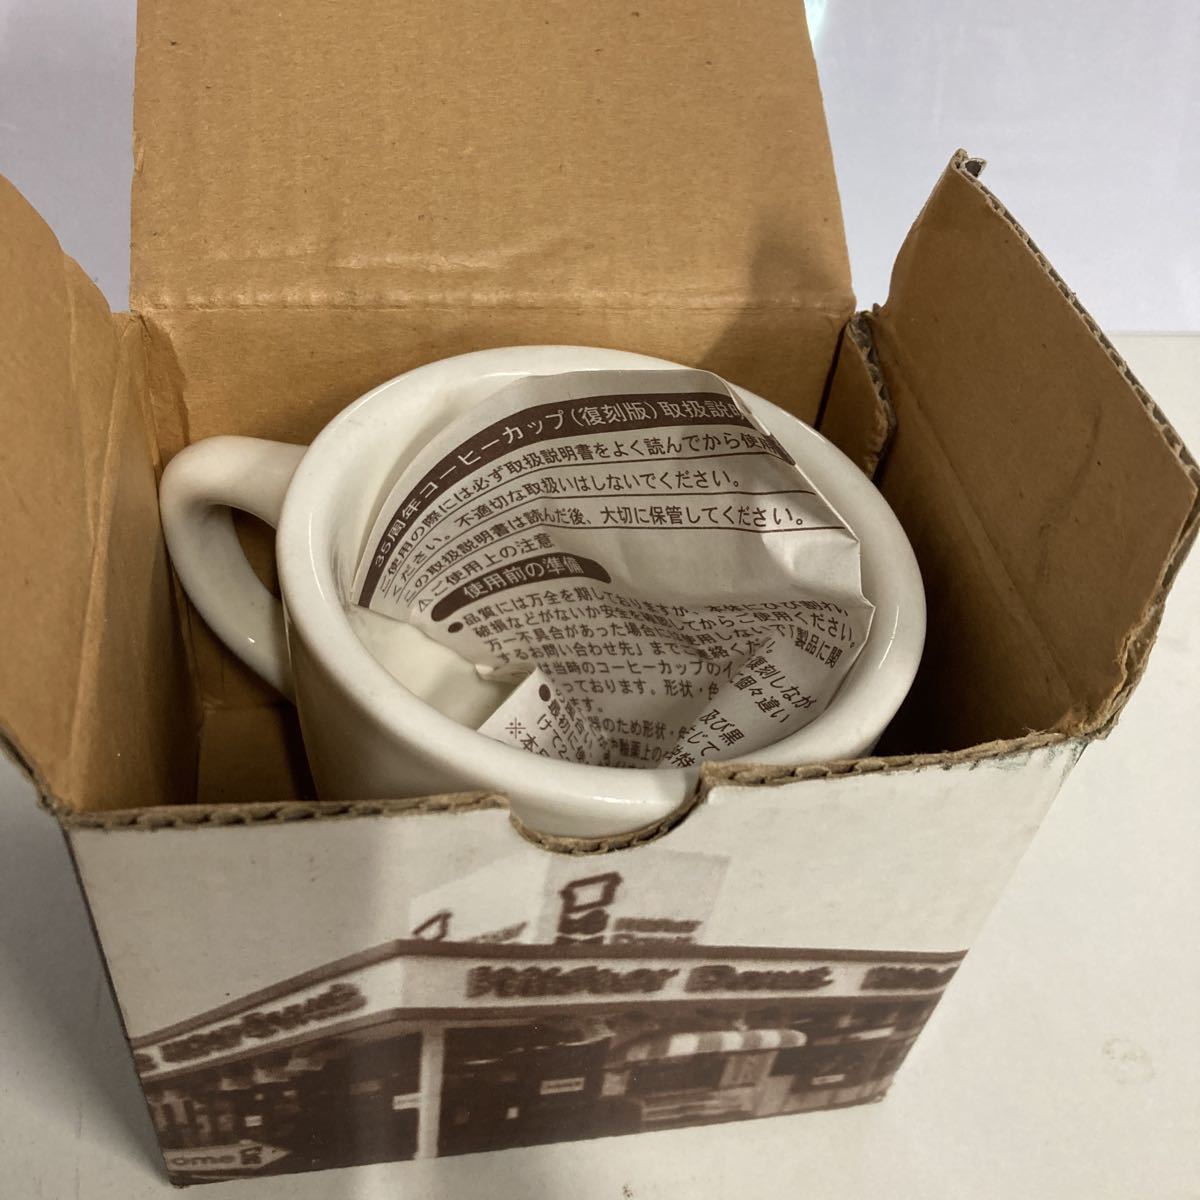  mug Mister Donut reprint coffee cup mistake do35 anniversary commemoration 